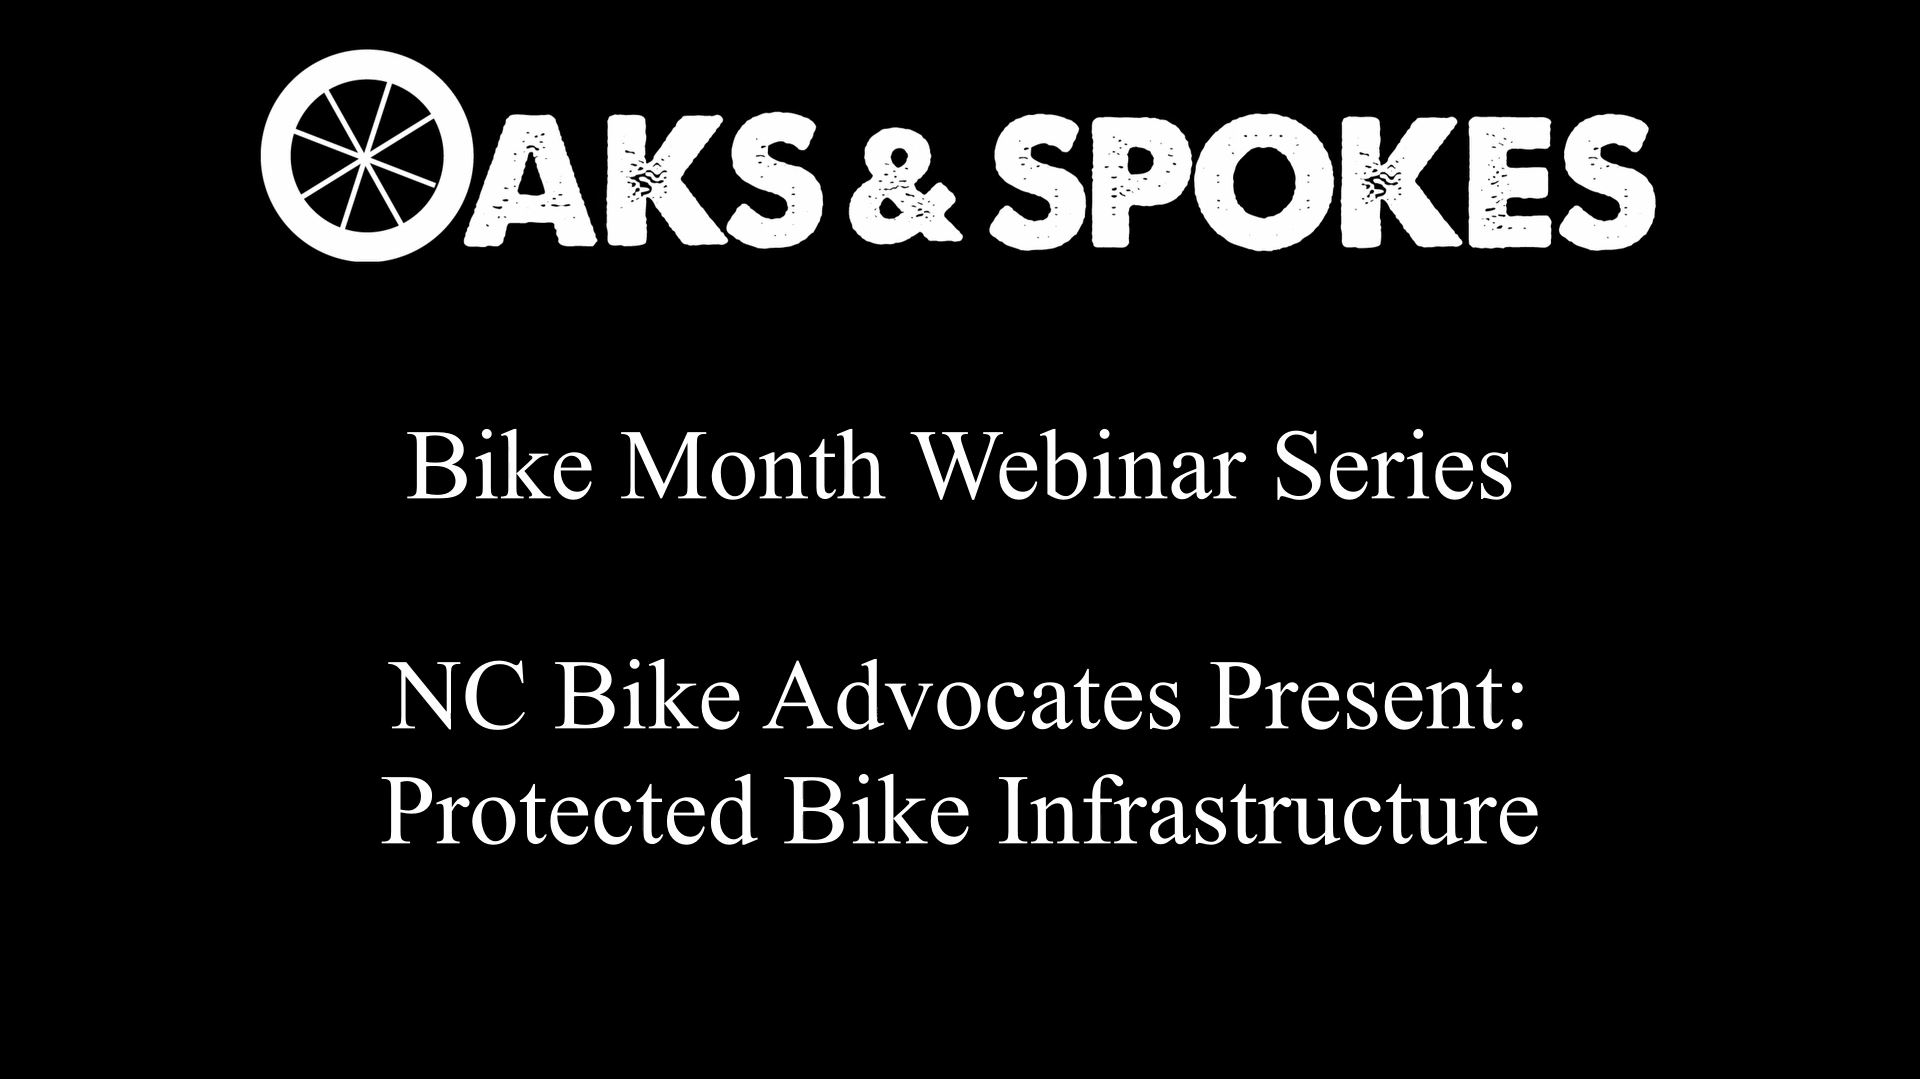 Oaks & Spokes Webinar: NC Bike Advocates Present Protected Bike Infrastructure